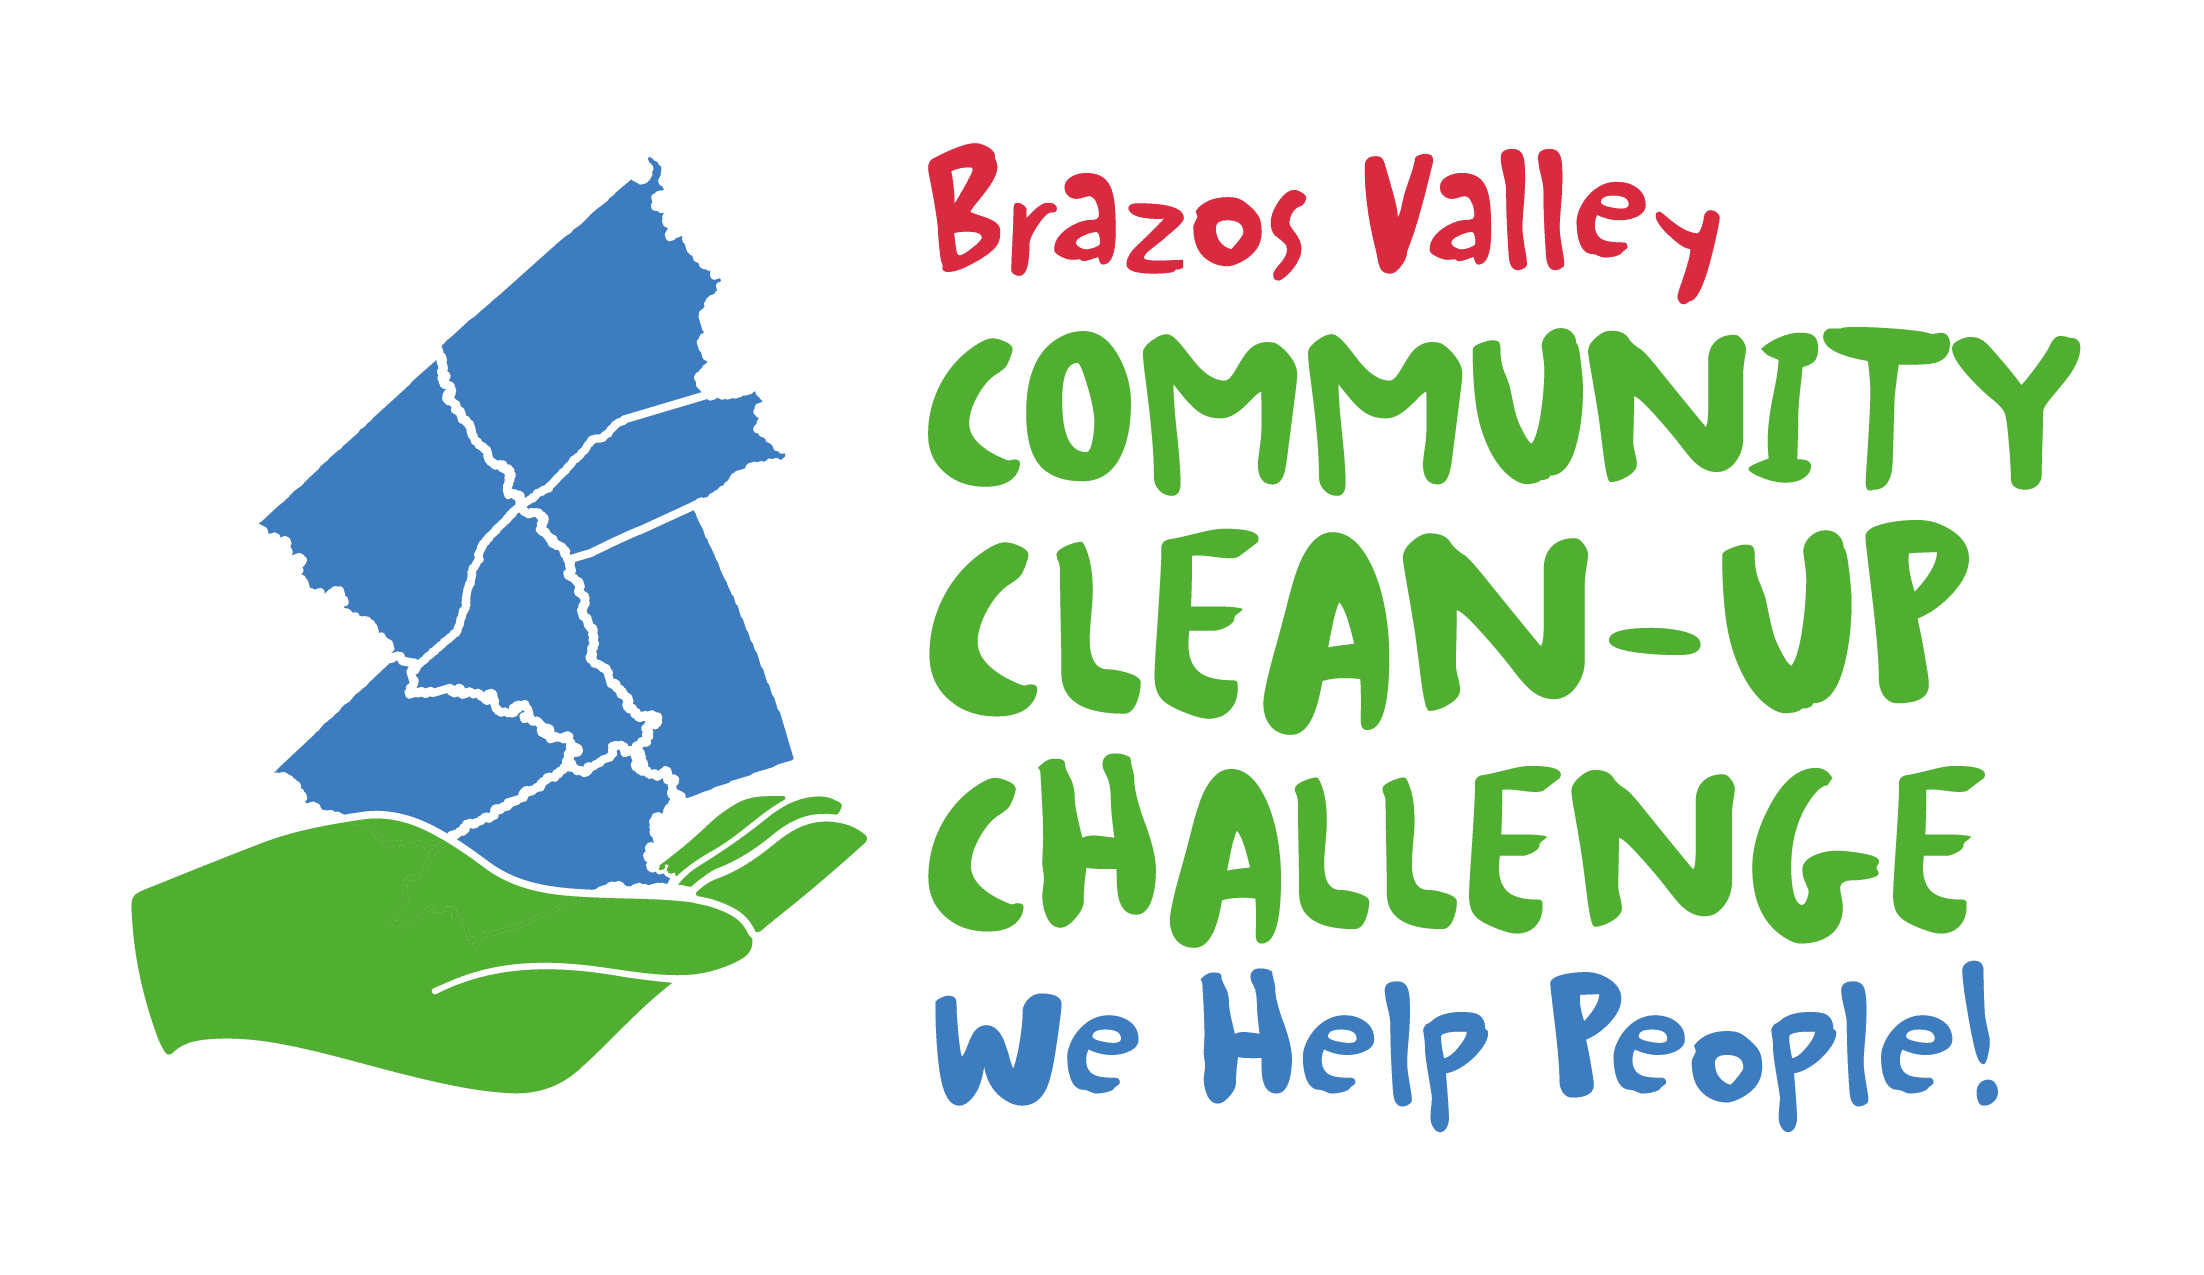 Brazos Valley Community Clean-Up Challenge